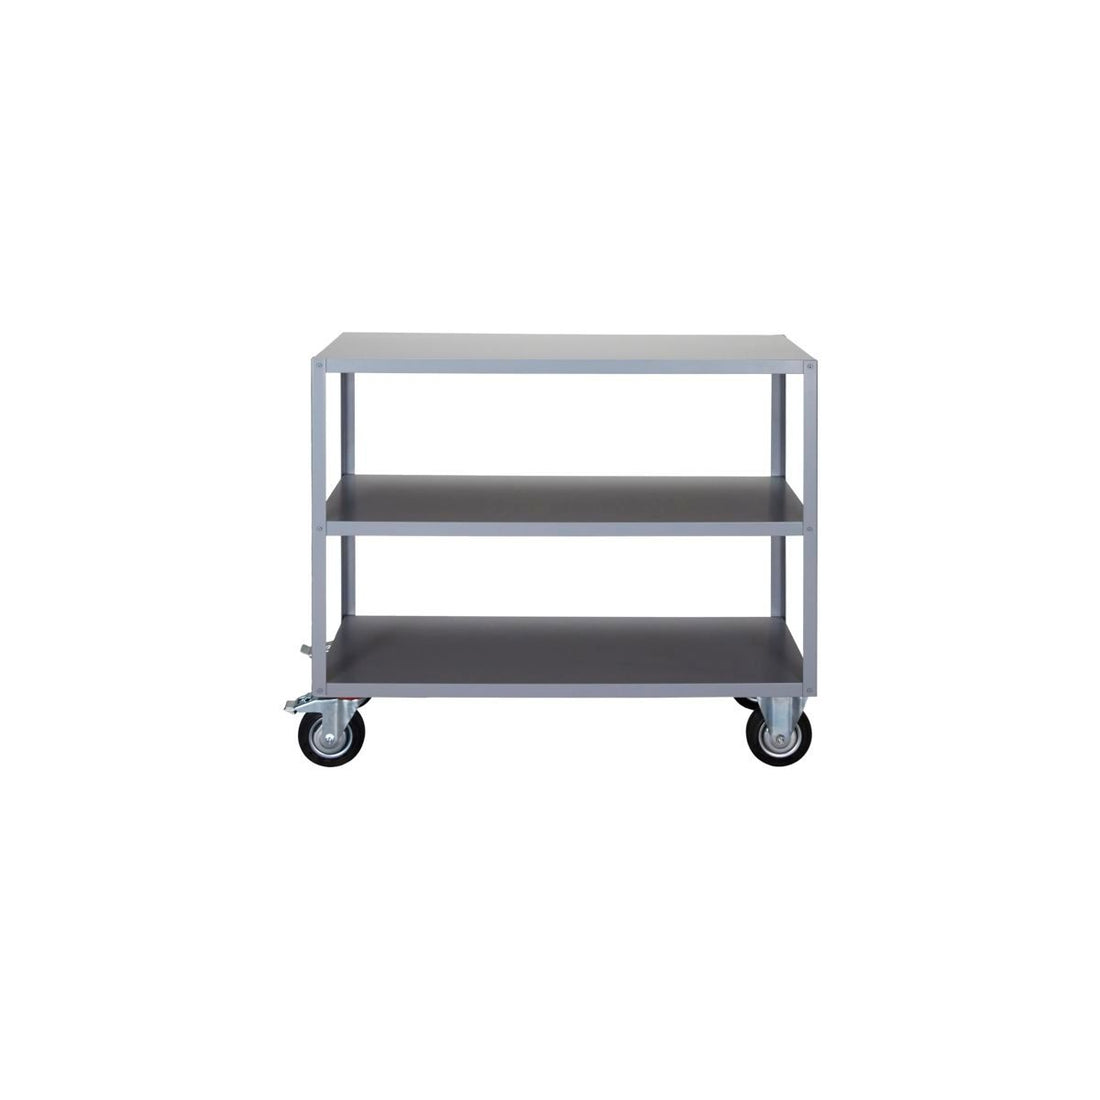 Nicolas vahe shelf with 4 wheels, trolley, gray